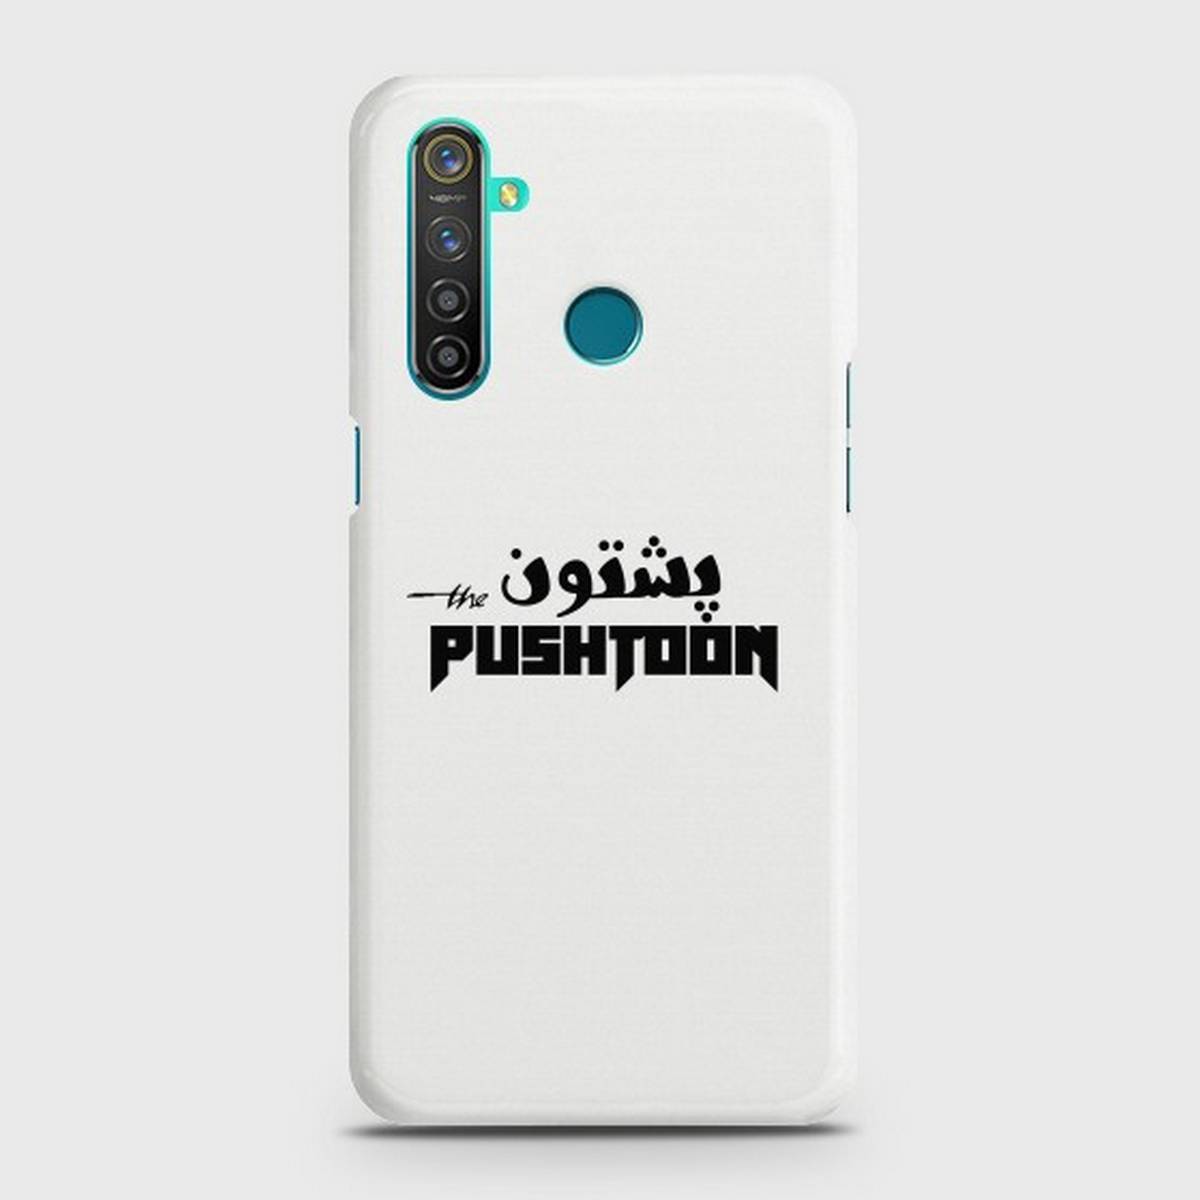 Custom Supreme Phone Case With Name Logo